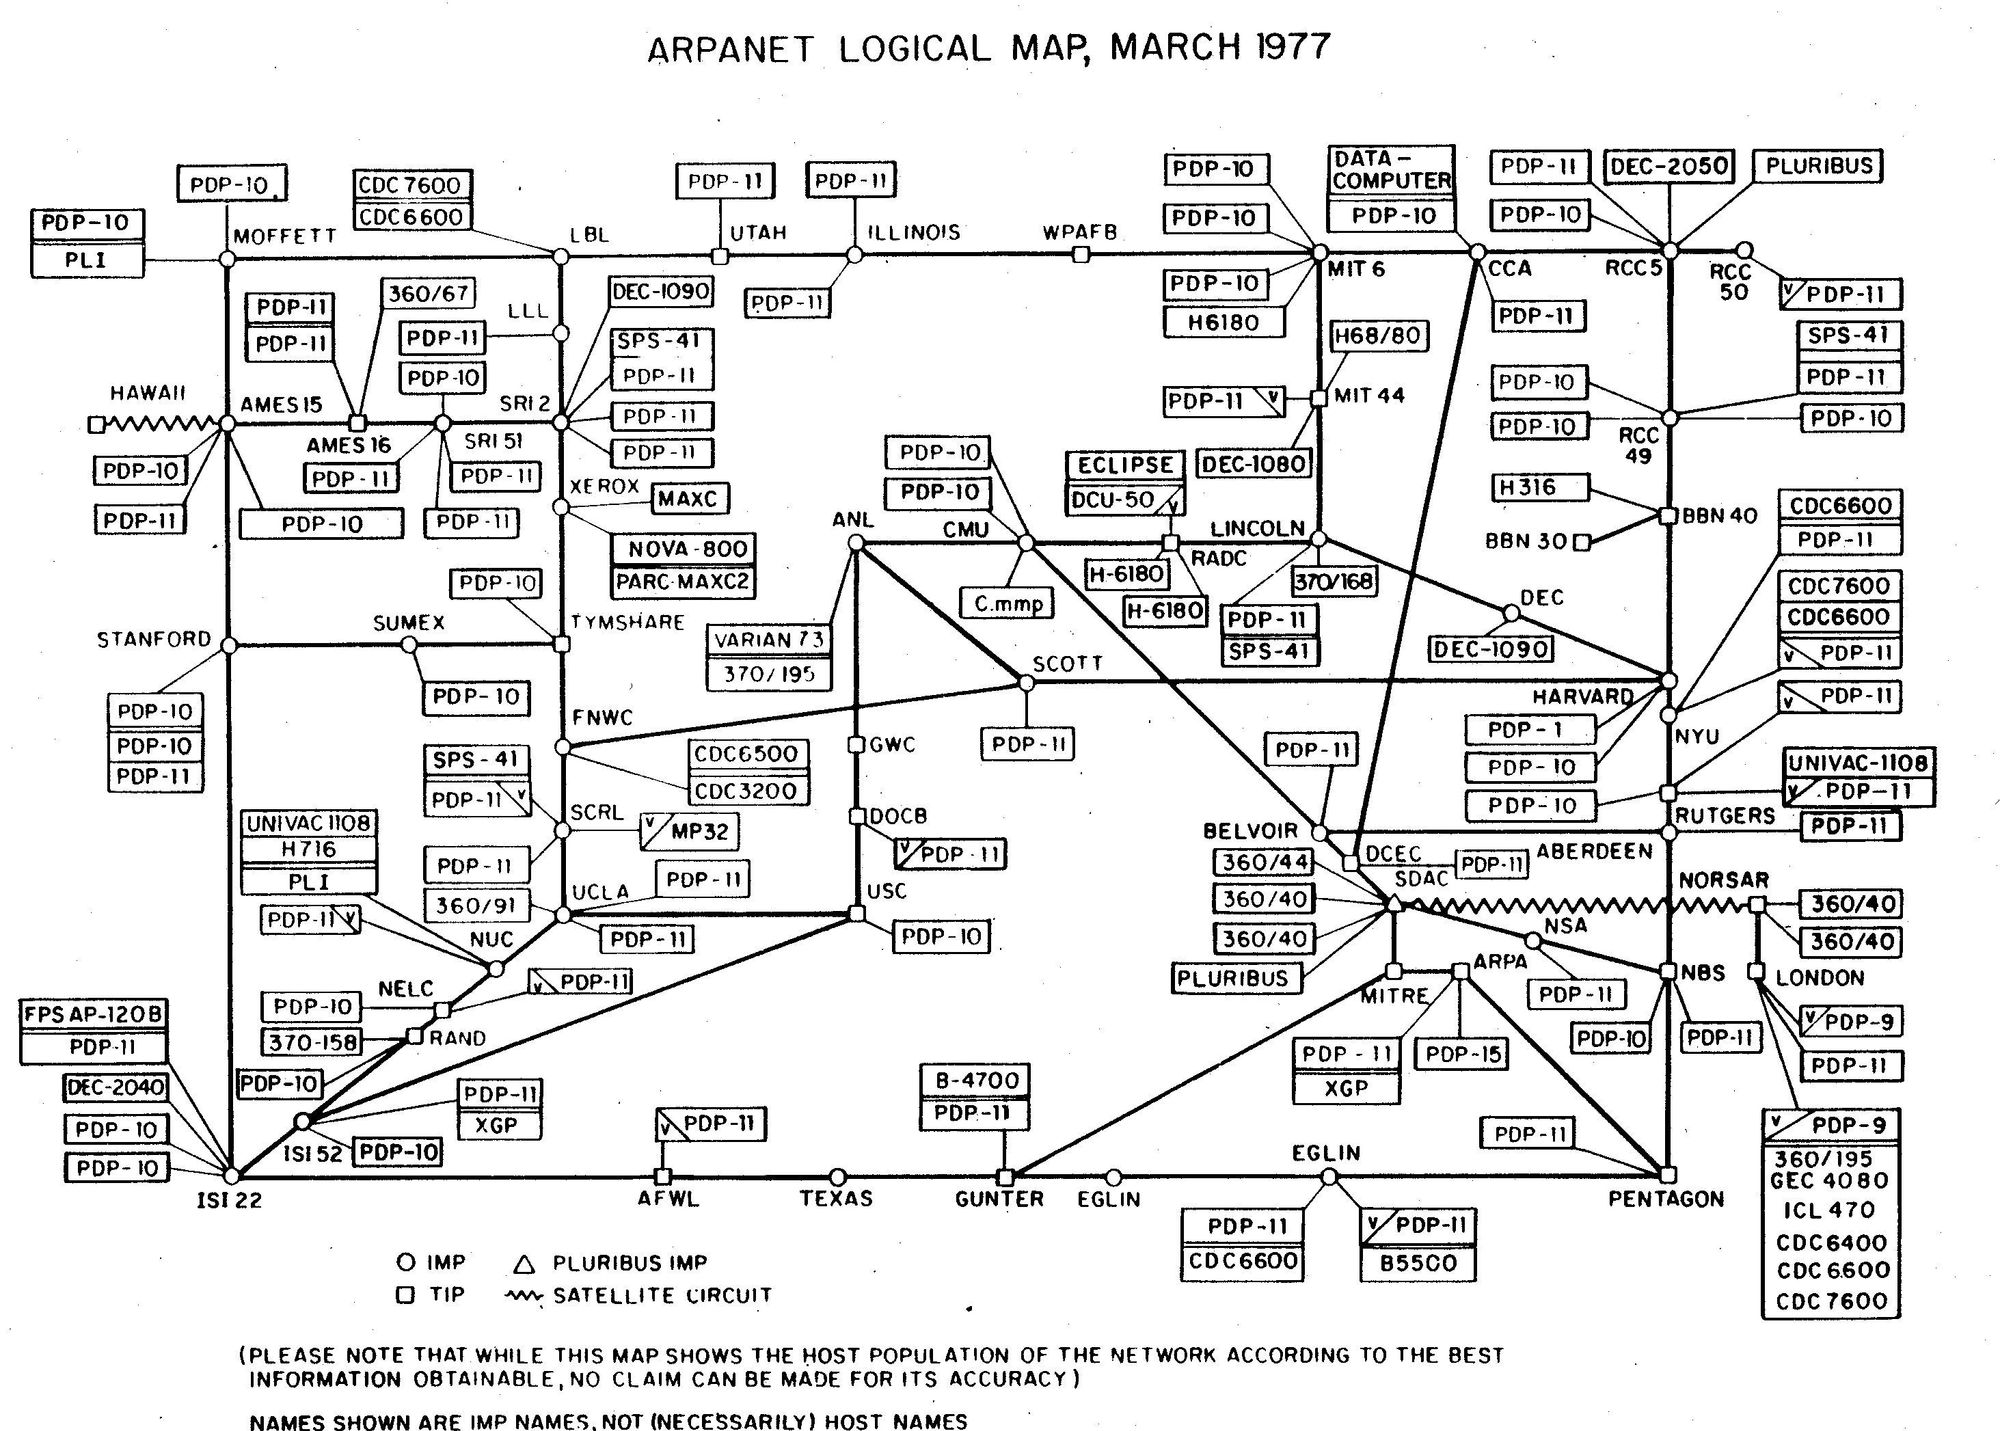 ARPANET i mars 1977.